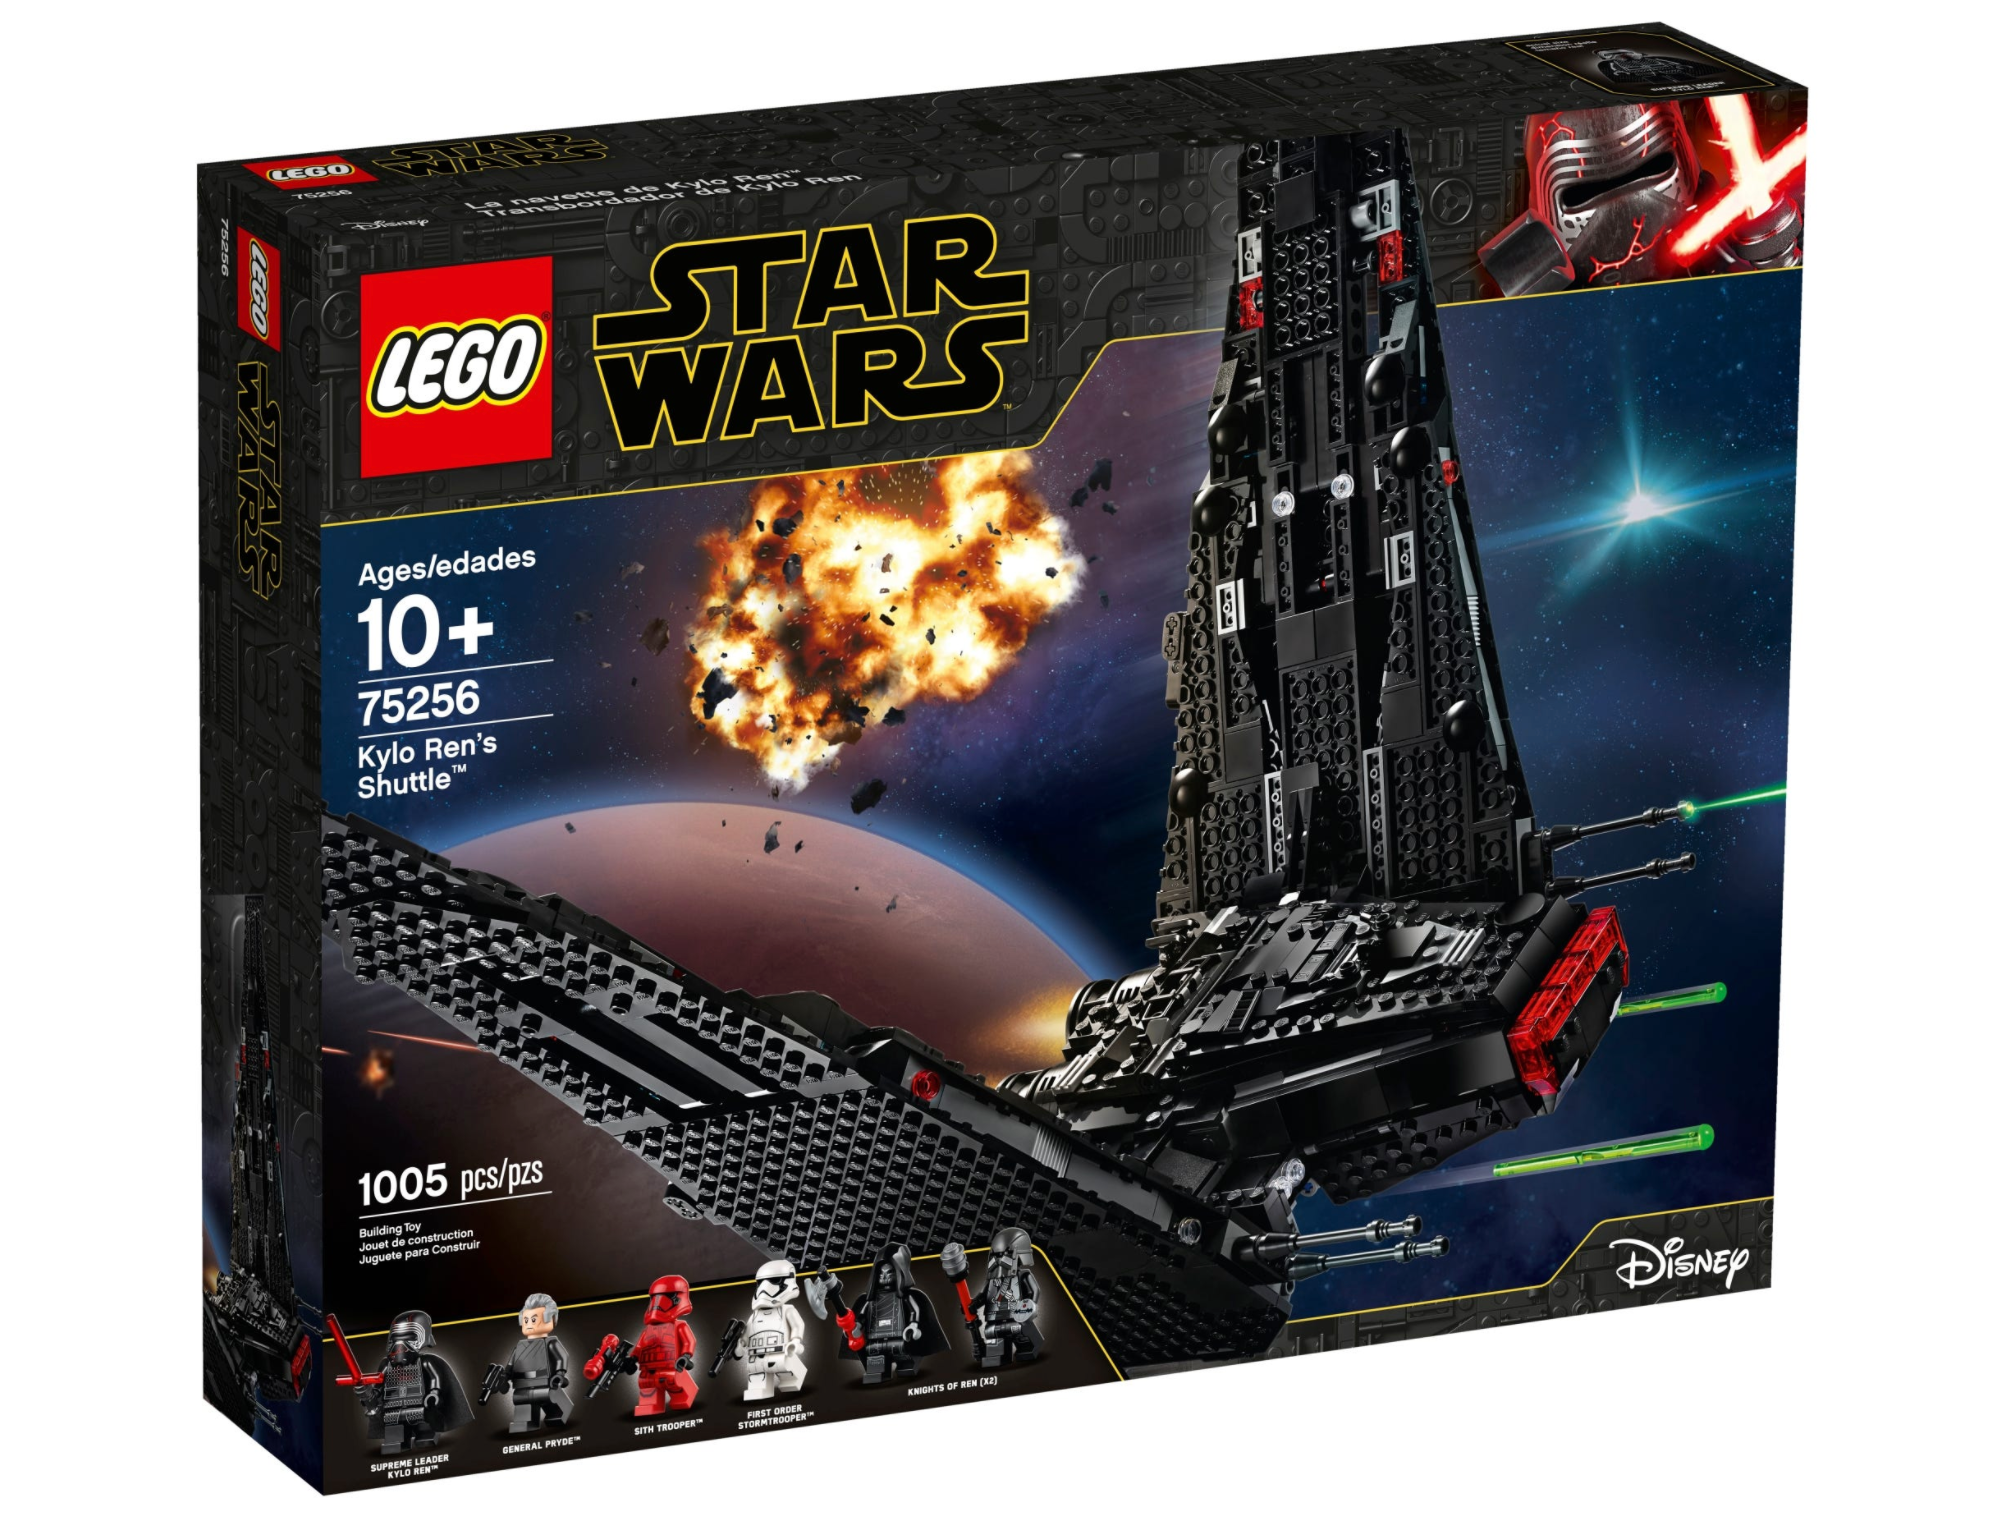 LEGO: Star Wars - Kylo Ren's Shuttle